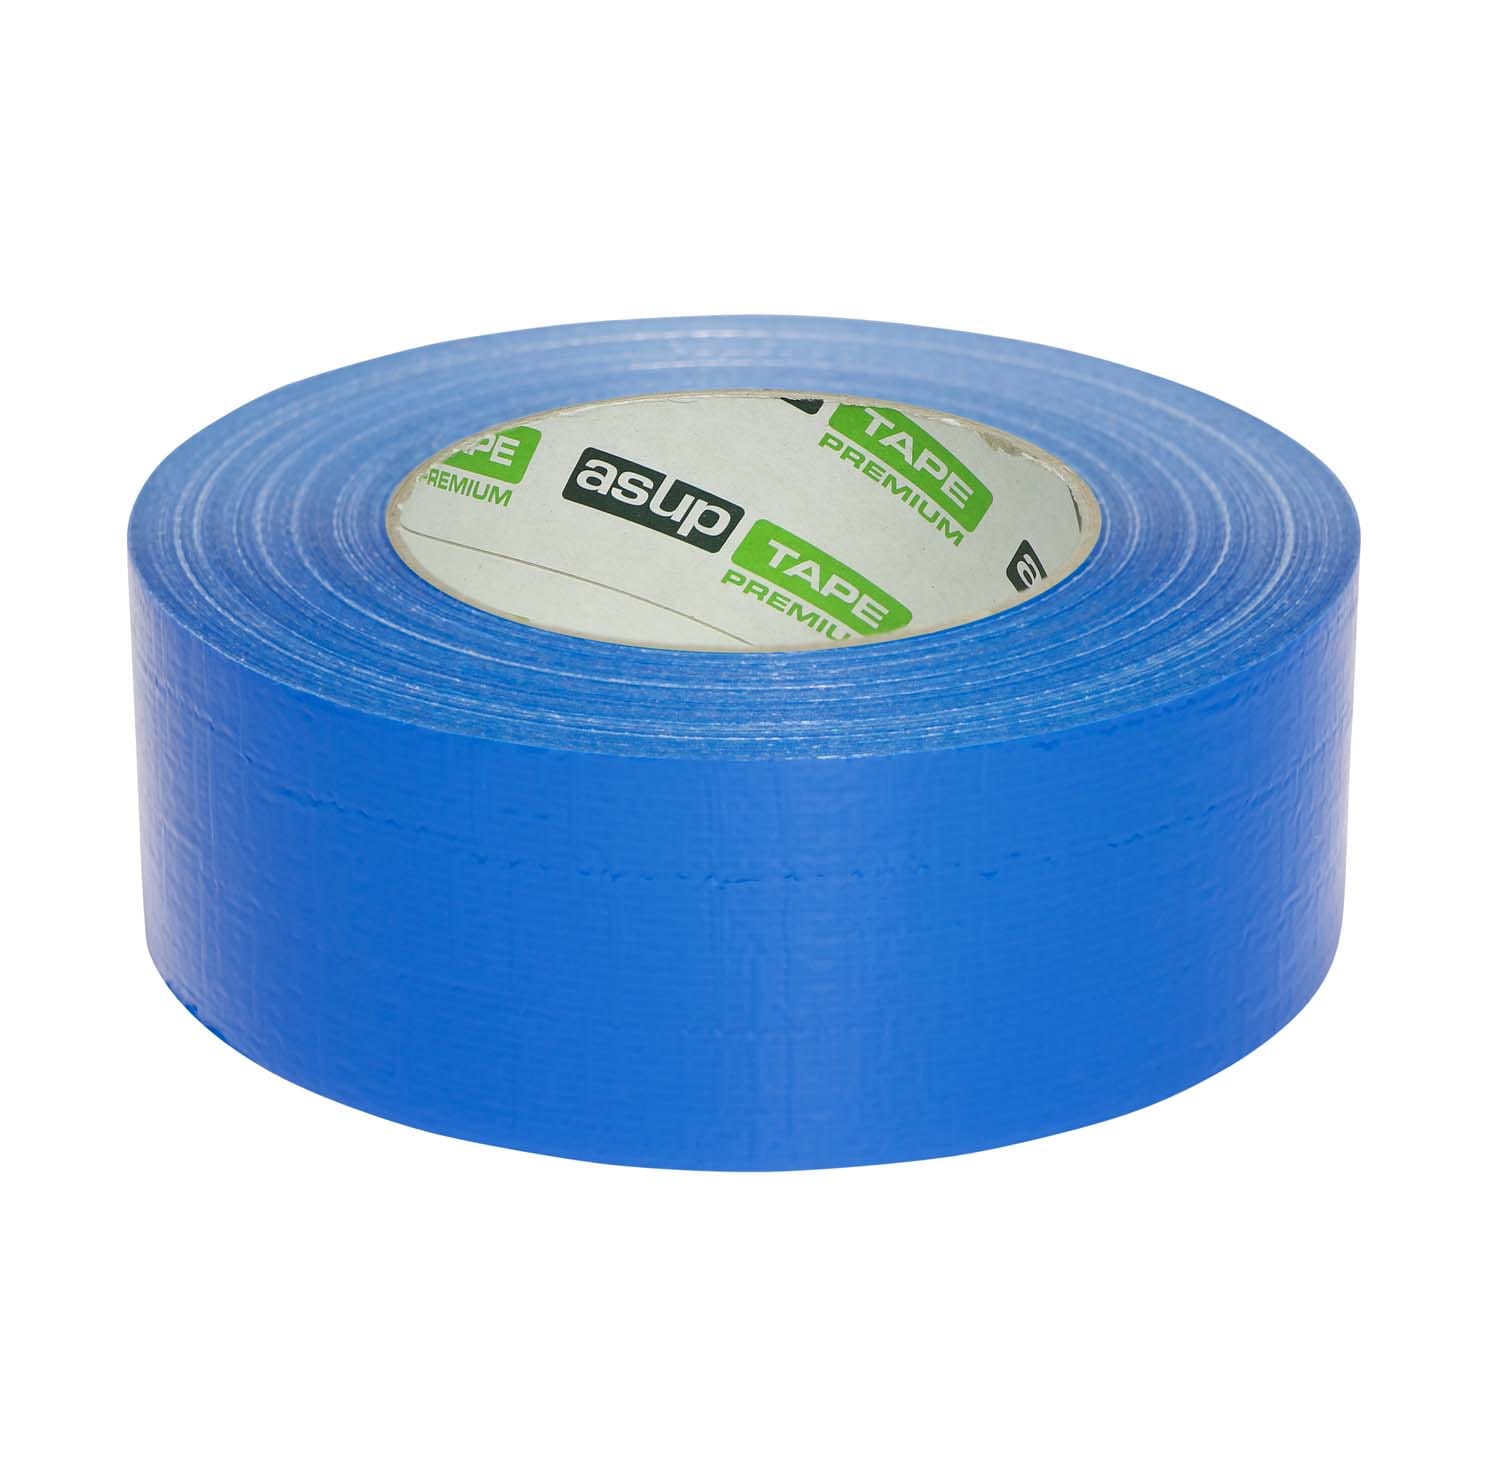 Gewebeklebeband Premium 48 mm x 50 m blau